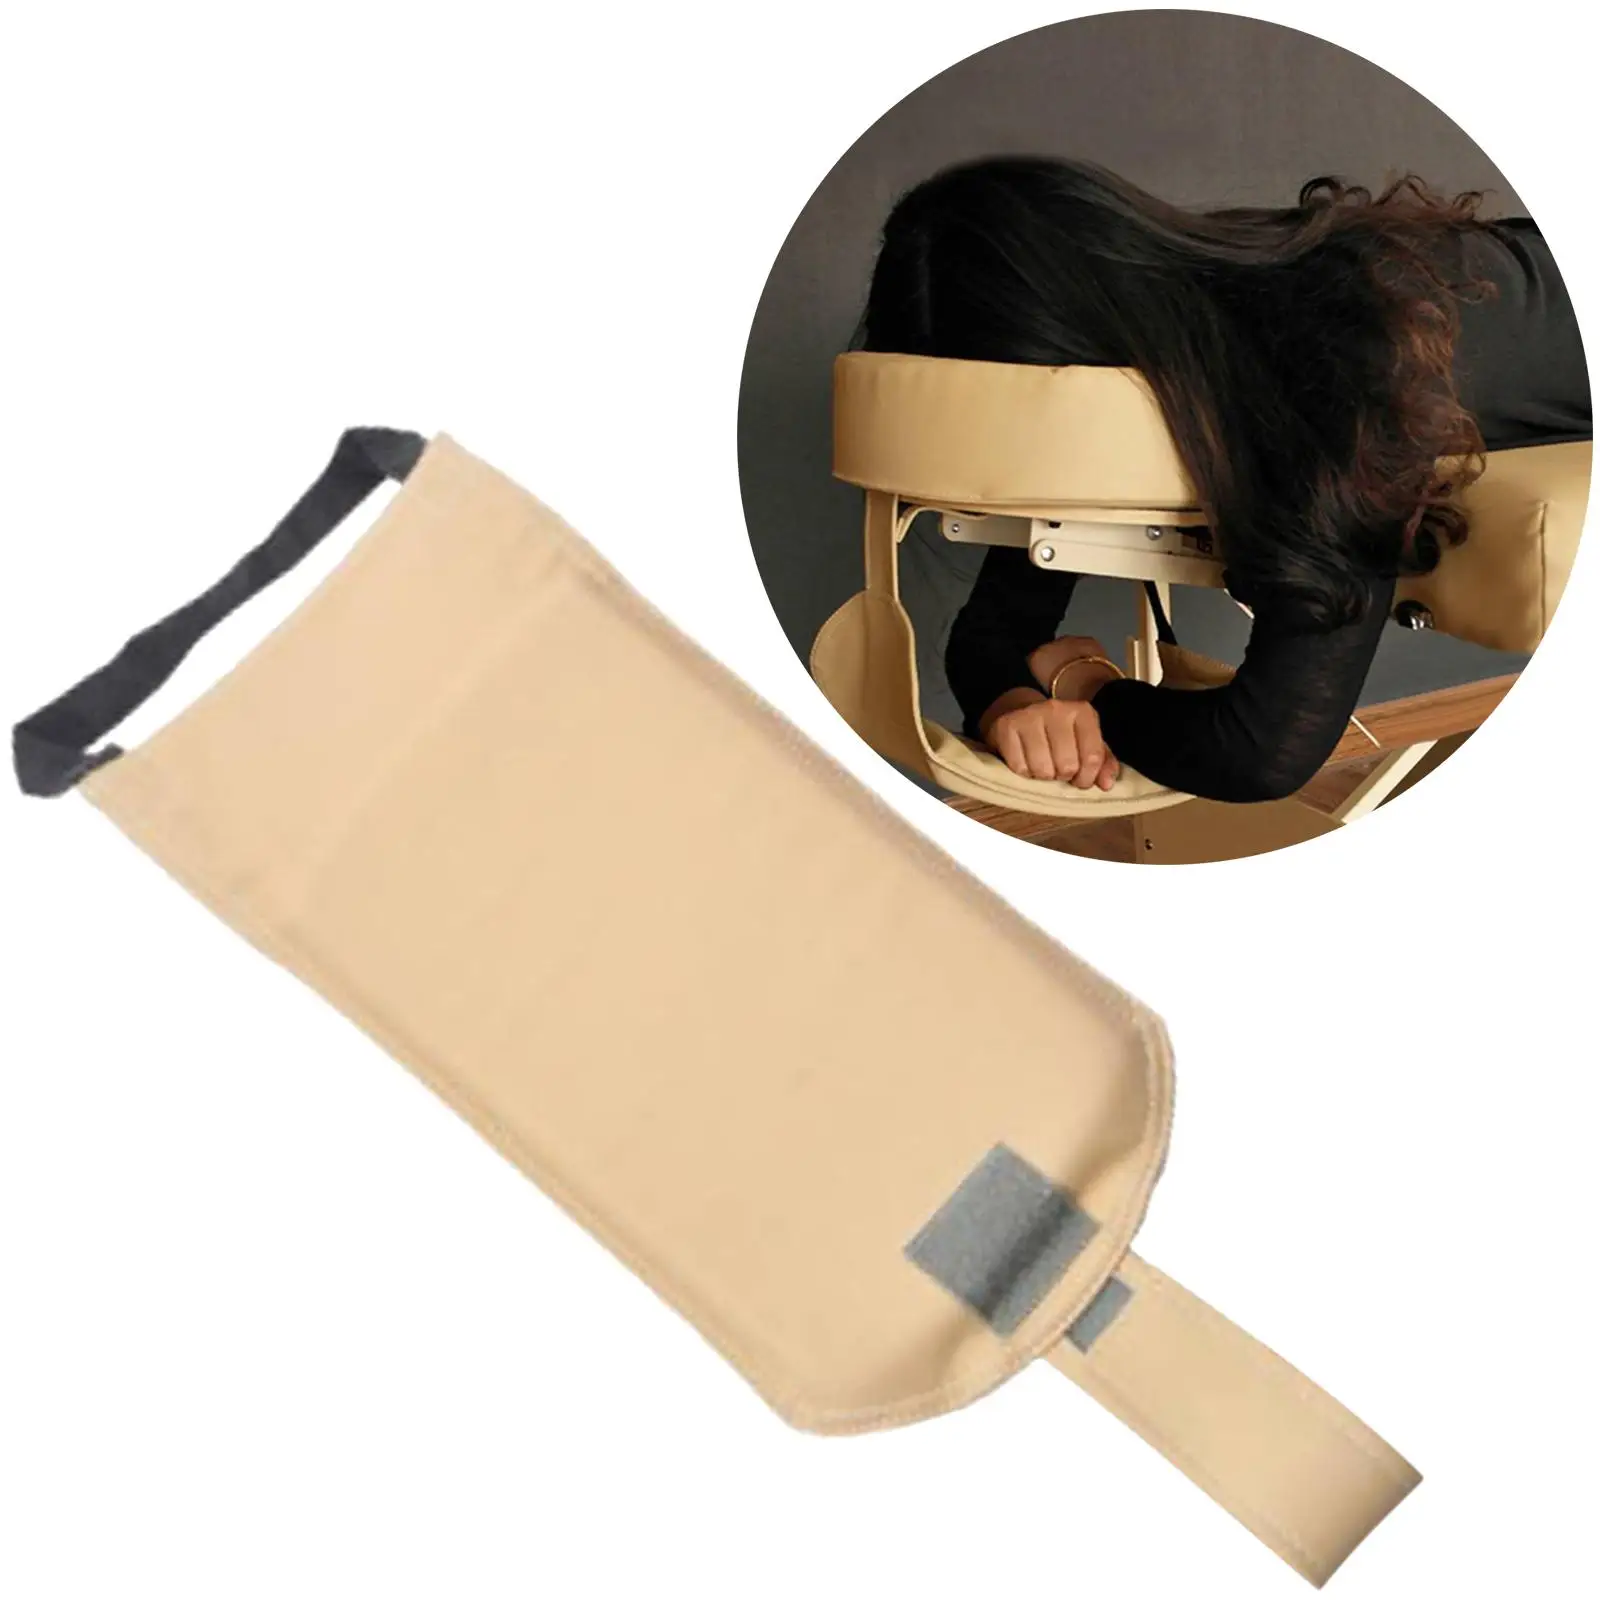 Universal Hanging Arm Rest PU Leather Armrest Support Sling Board for Massage Table Salon Bed